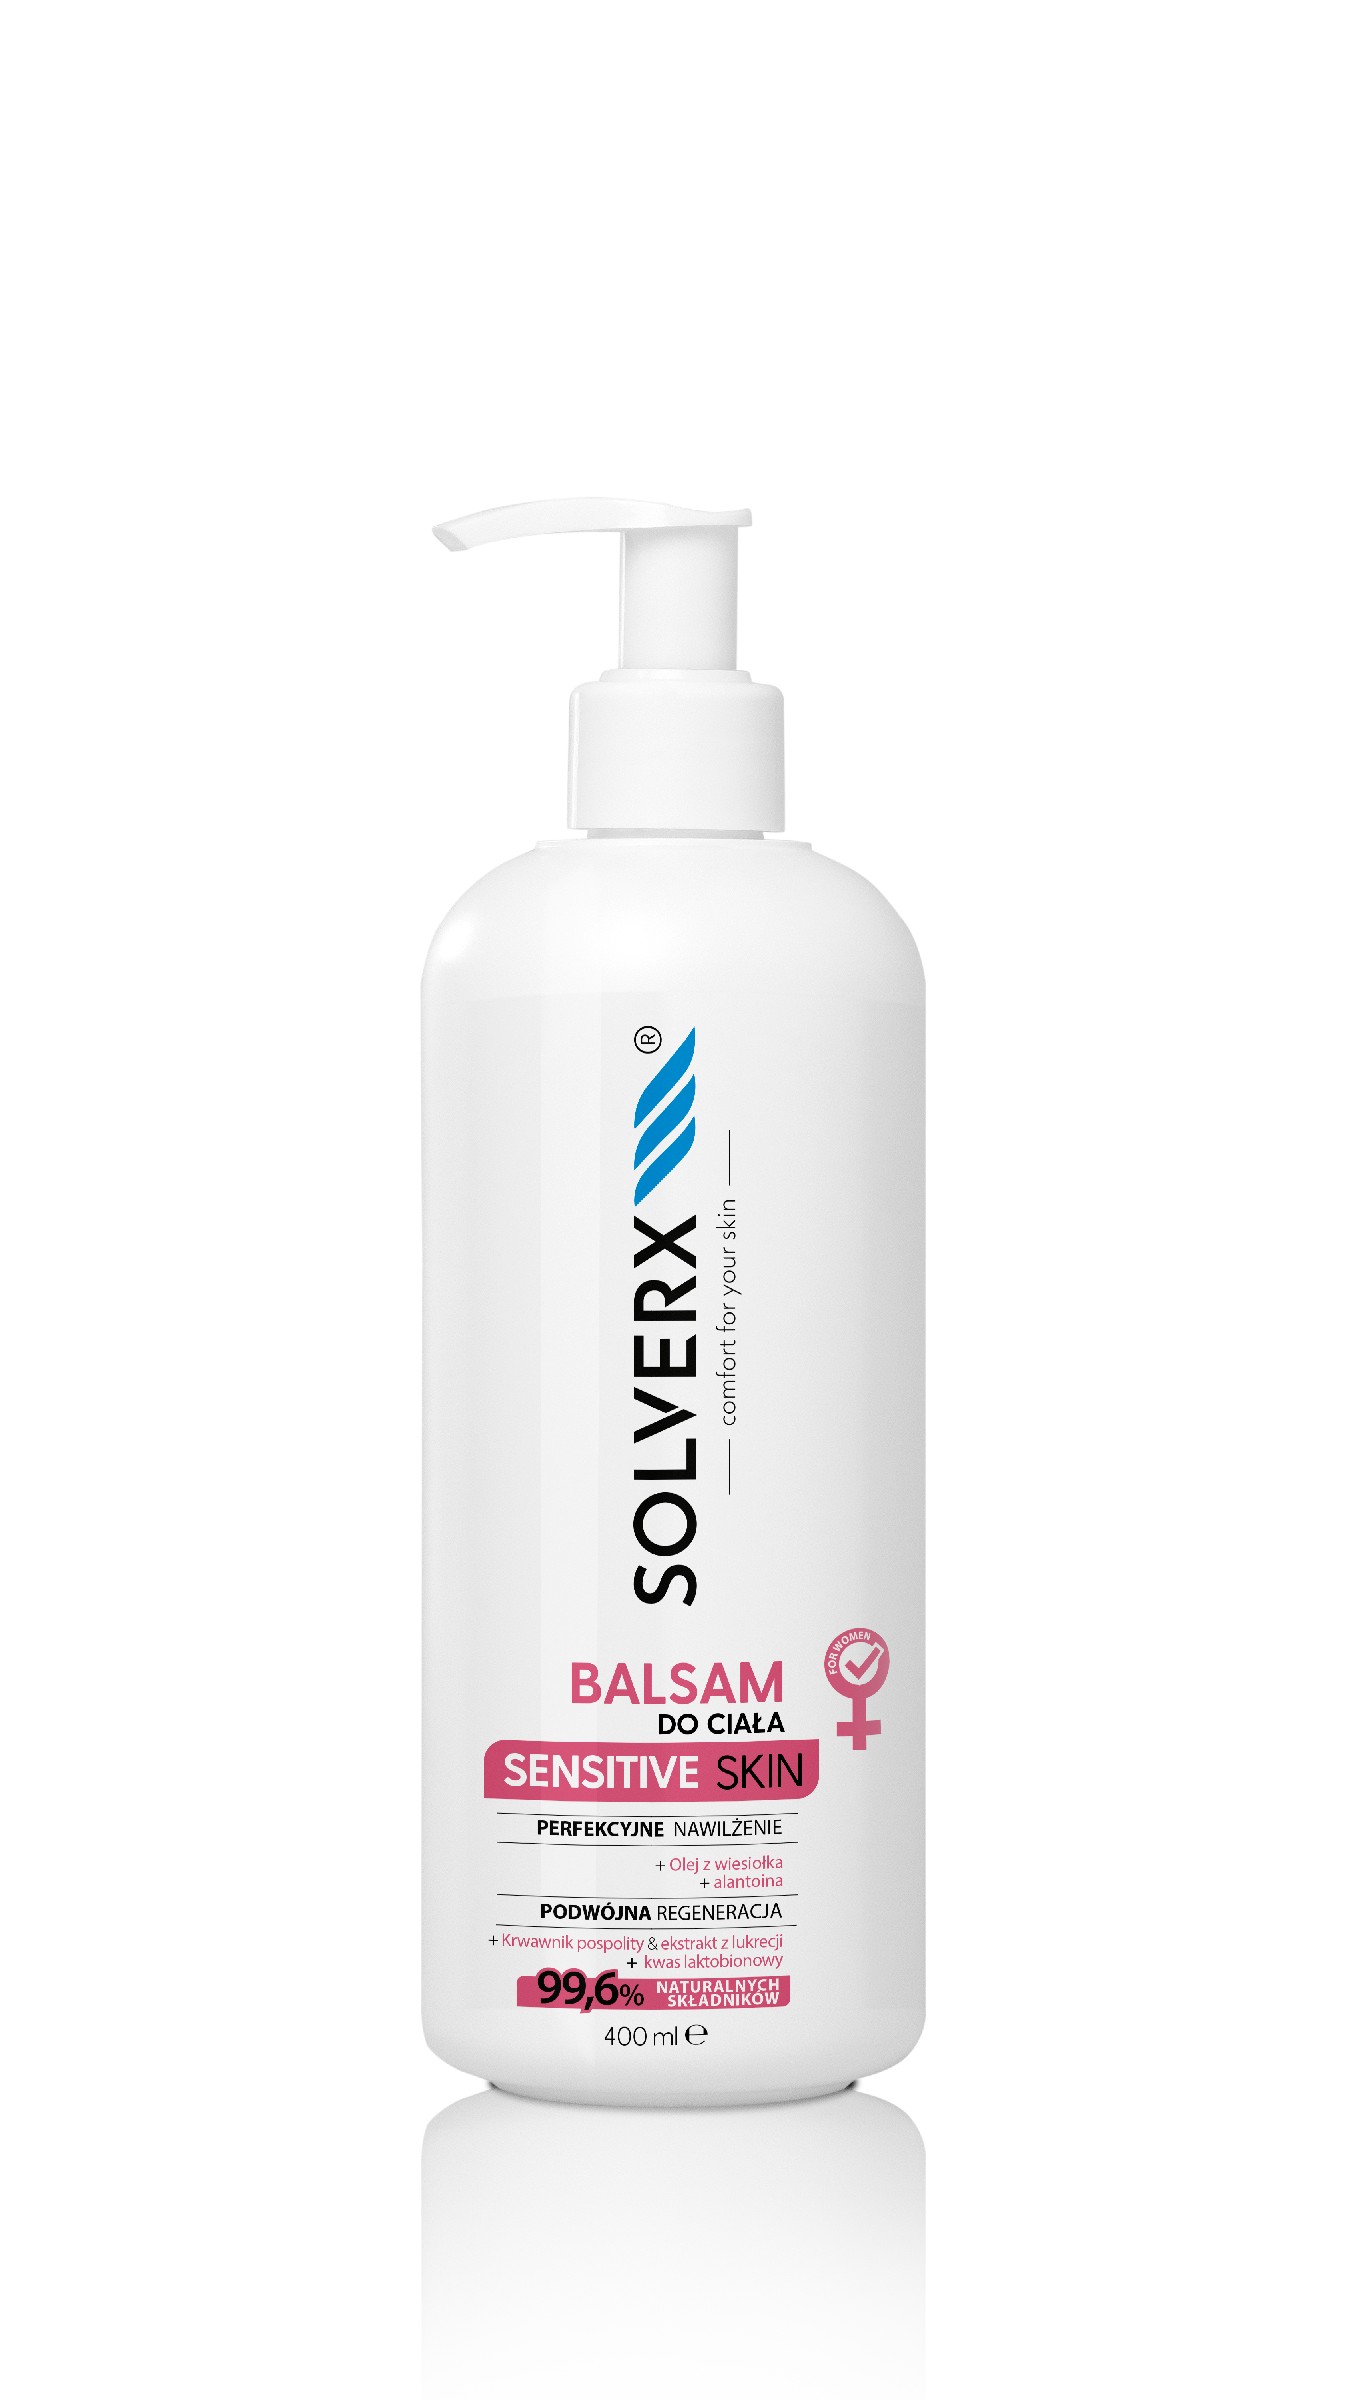 SOLVERX Sensitive Skin Balsam do ciała do skóry wrażliwej  400ml - pompka